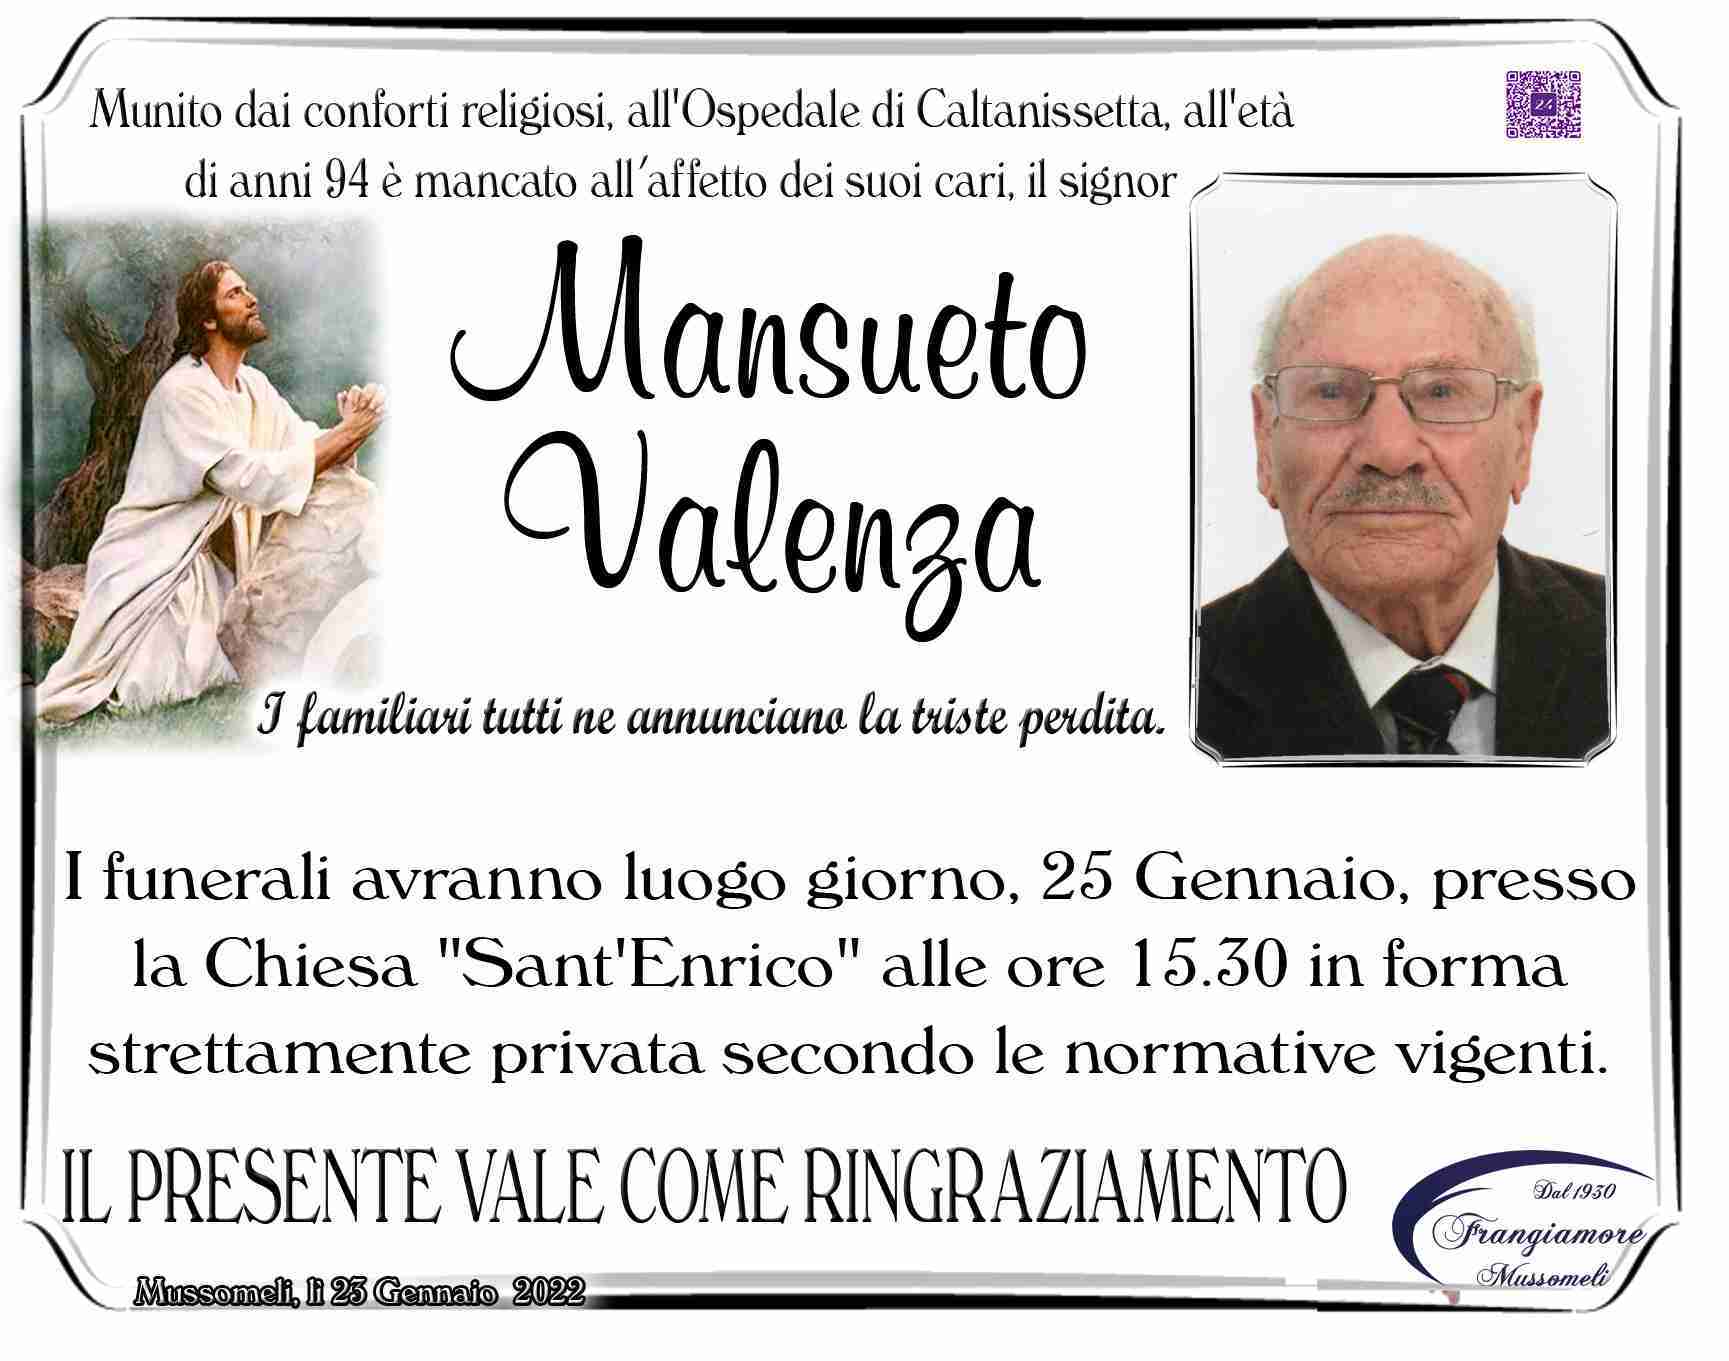 Mansueto Valenza